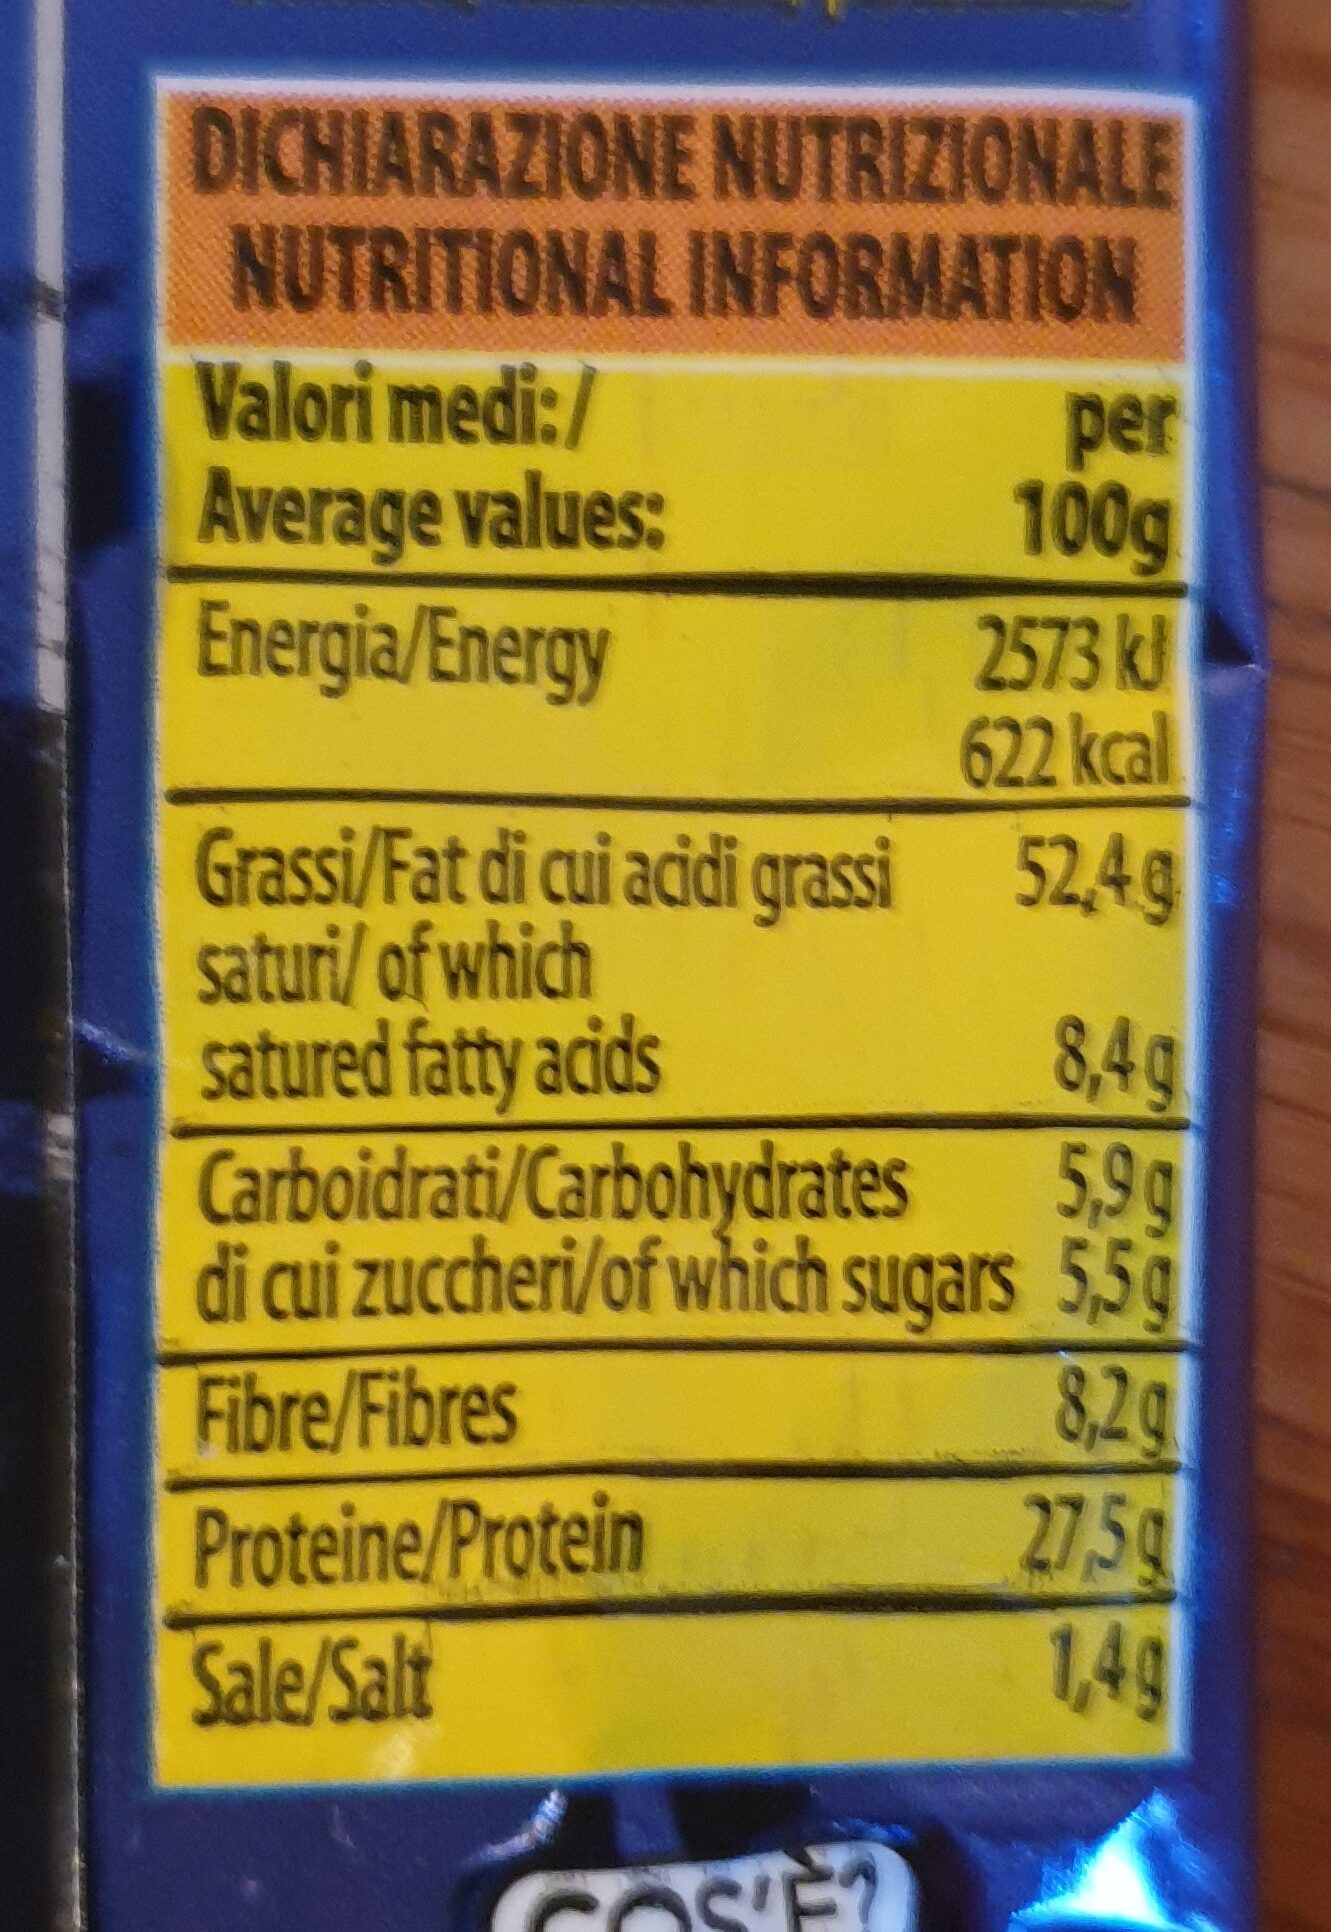 Arachidi tostate e salate - Valori nutrizionali